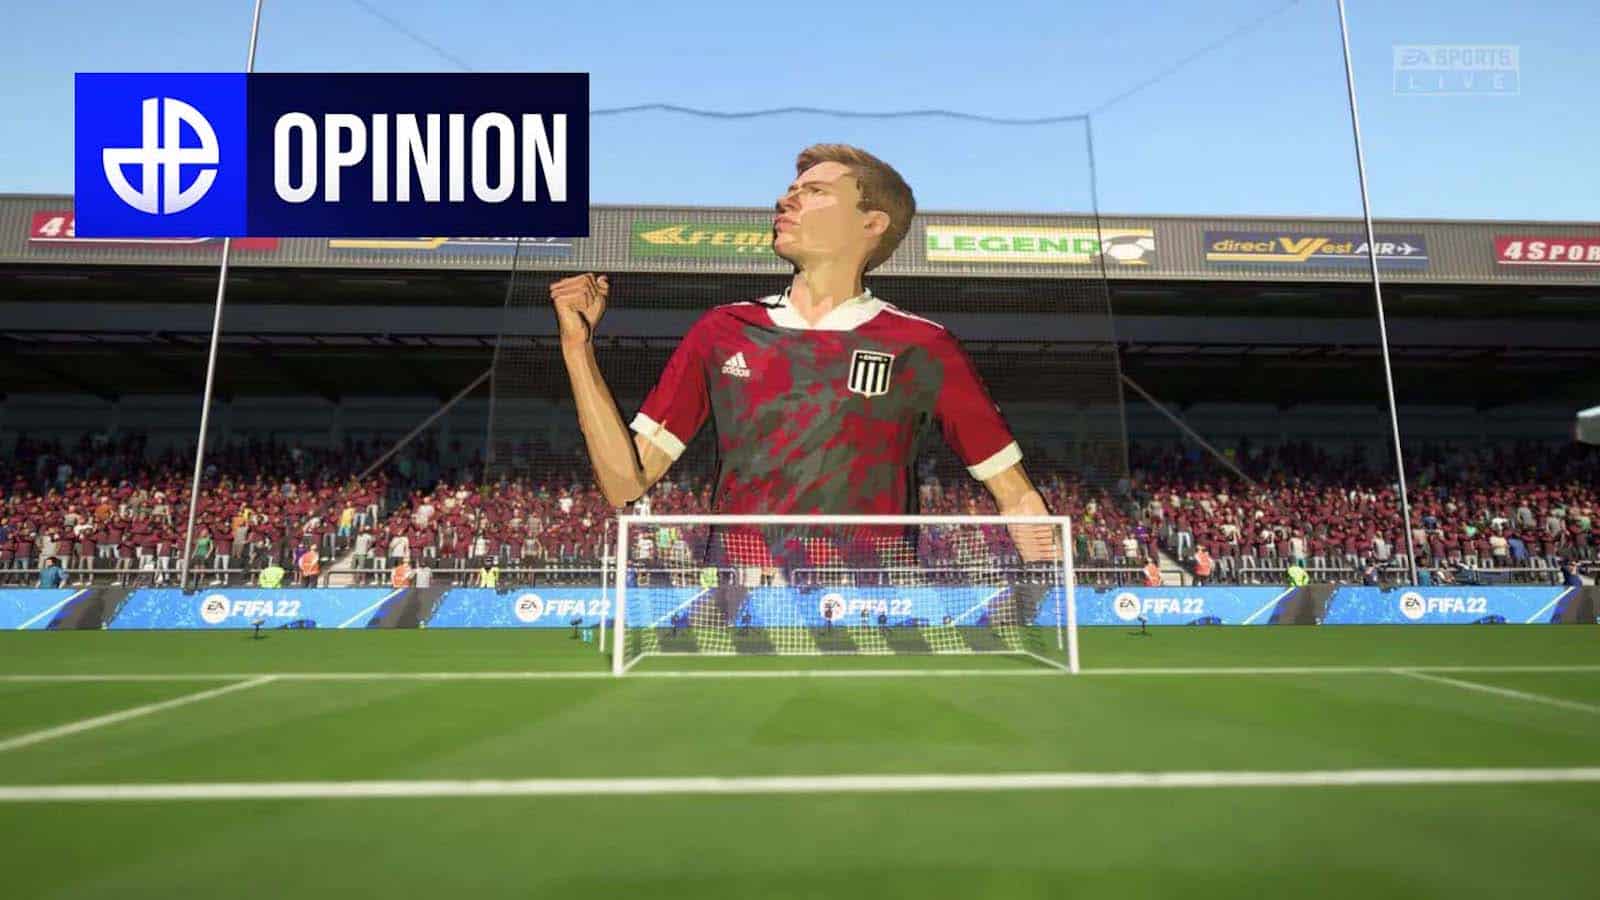 FIFA 22 career mode screenshot with opinion sticker